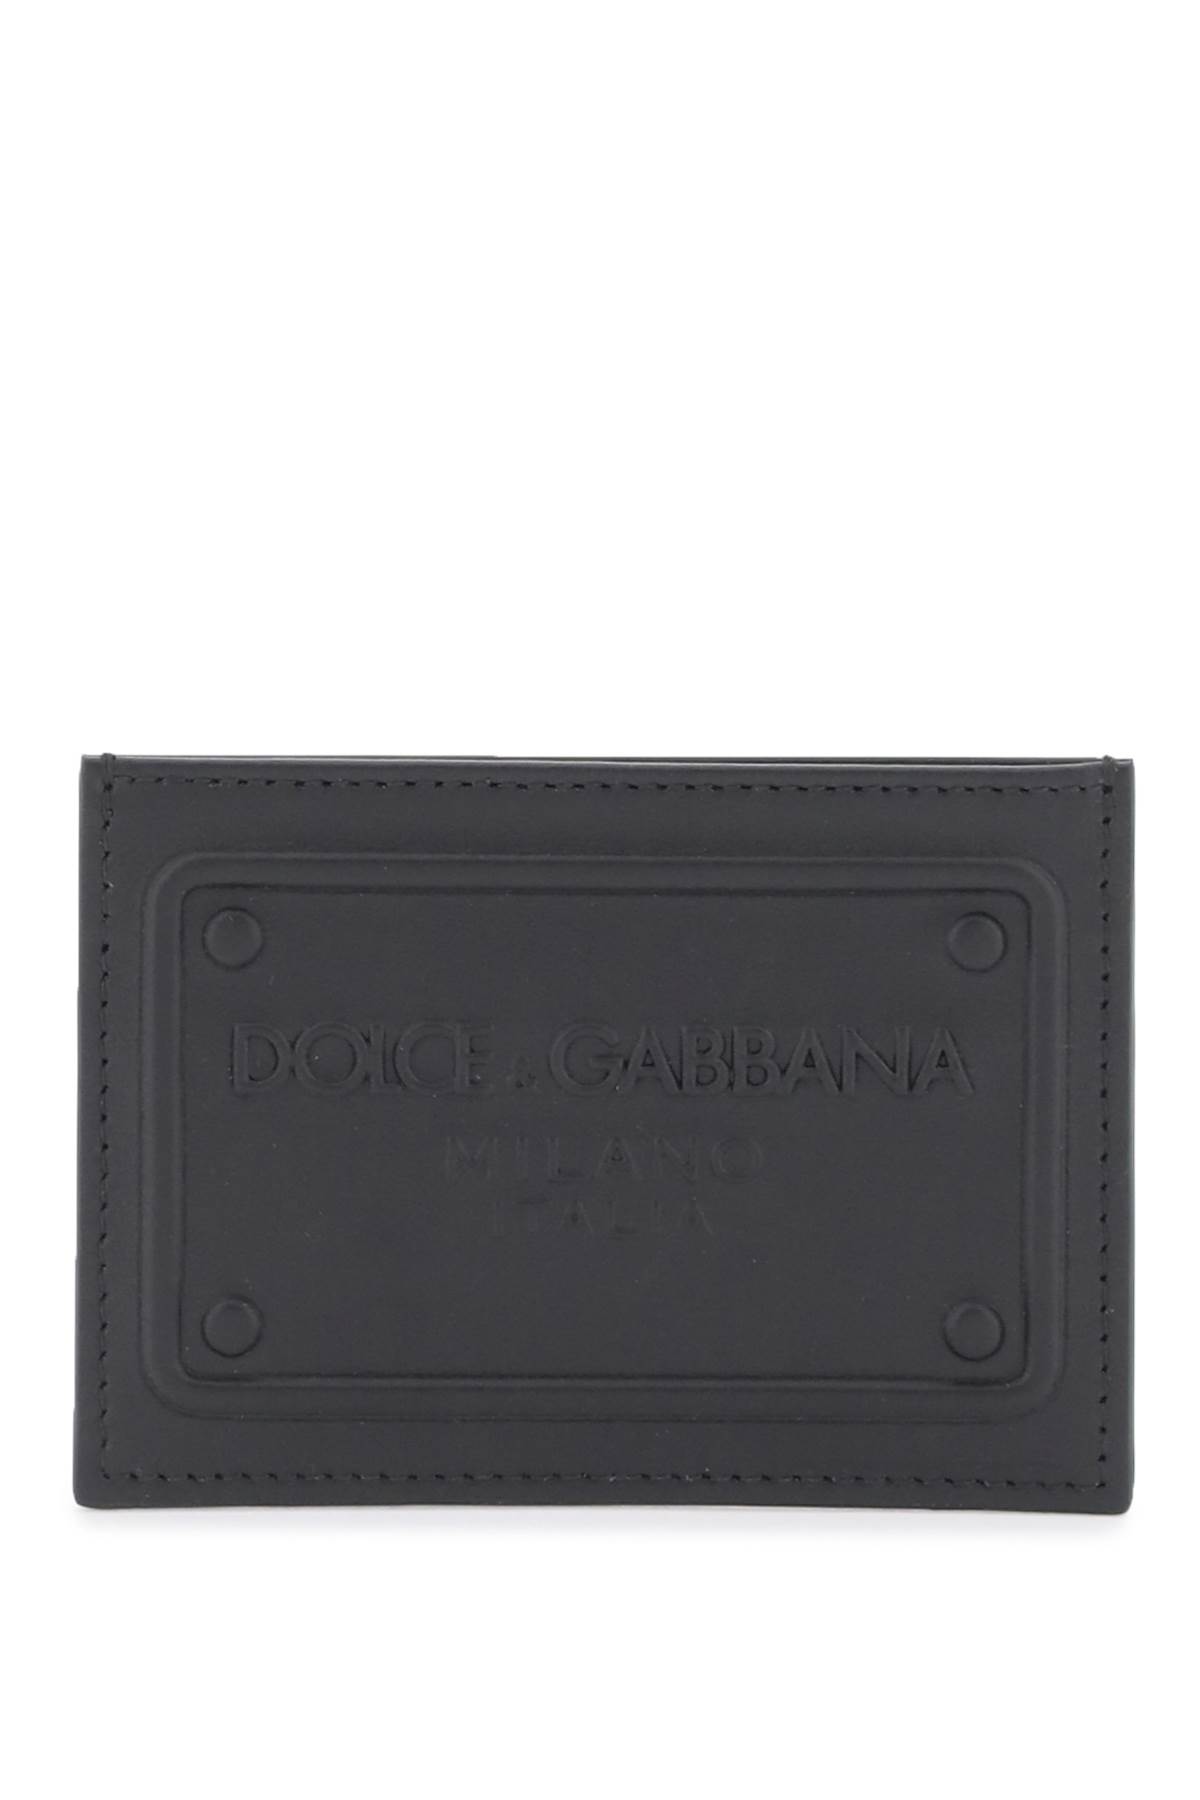 Dolce & Gabbana Embossed Logo Leather Cardholder In Nero (black)